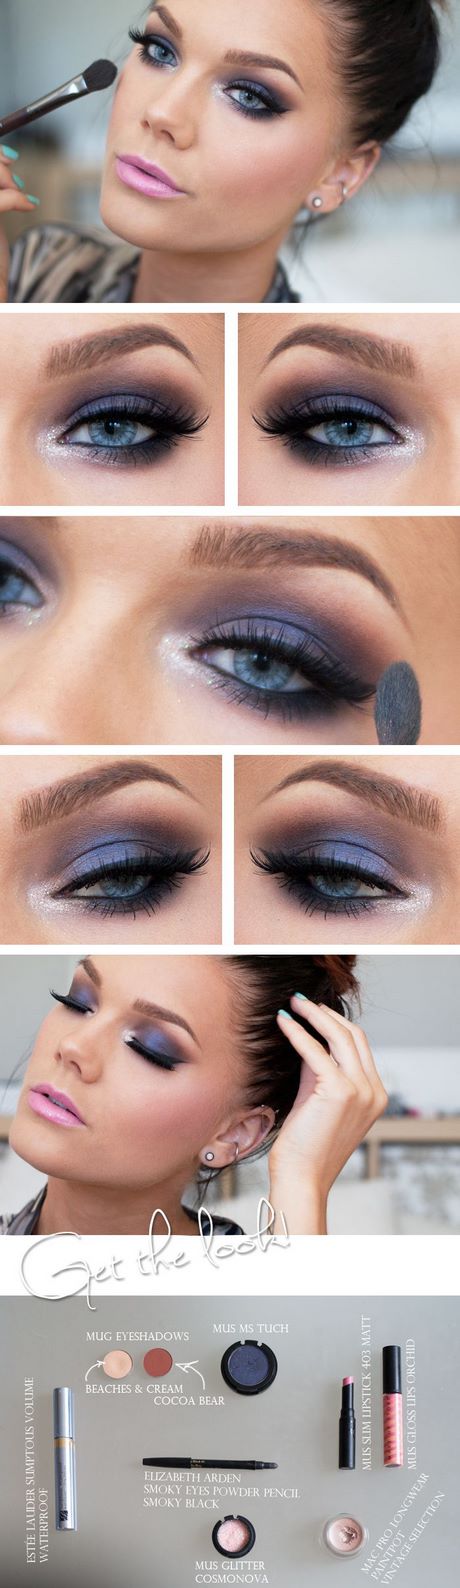 mac-eye-makeup-tutorials-05_6 Mac oog make-up tutorials